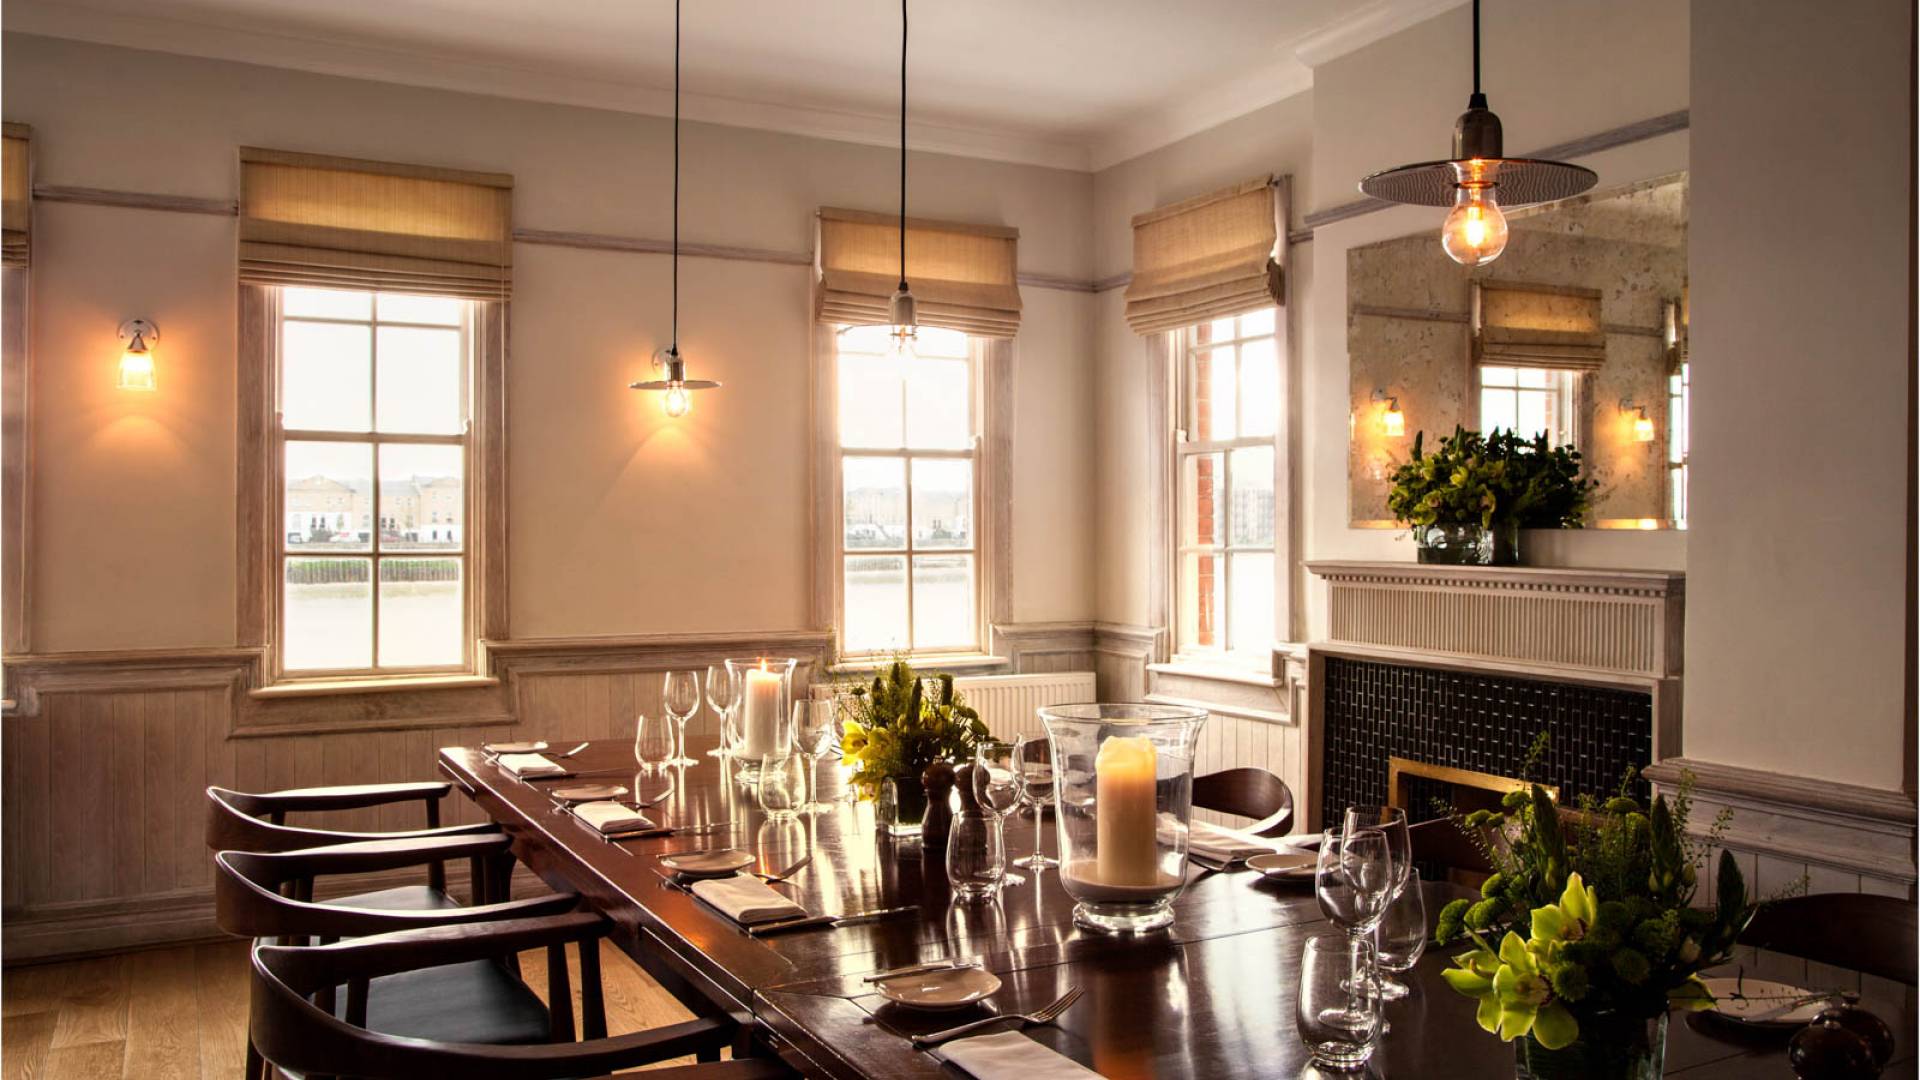 Bread Street Kitchen & Bar Limehouse – Free February half-term dining